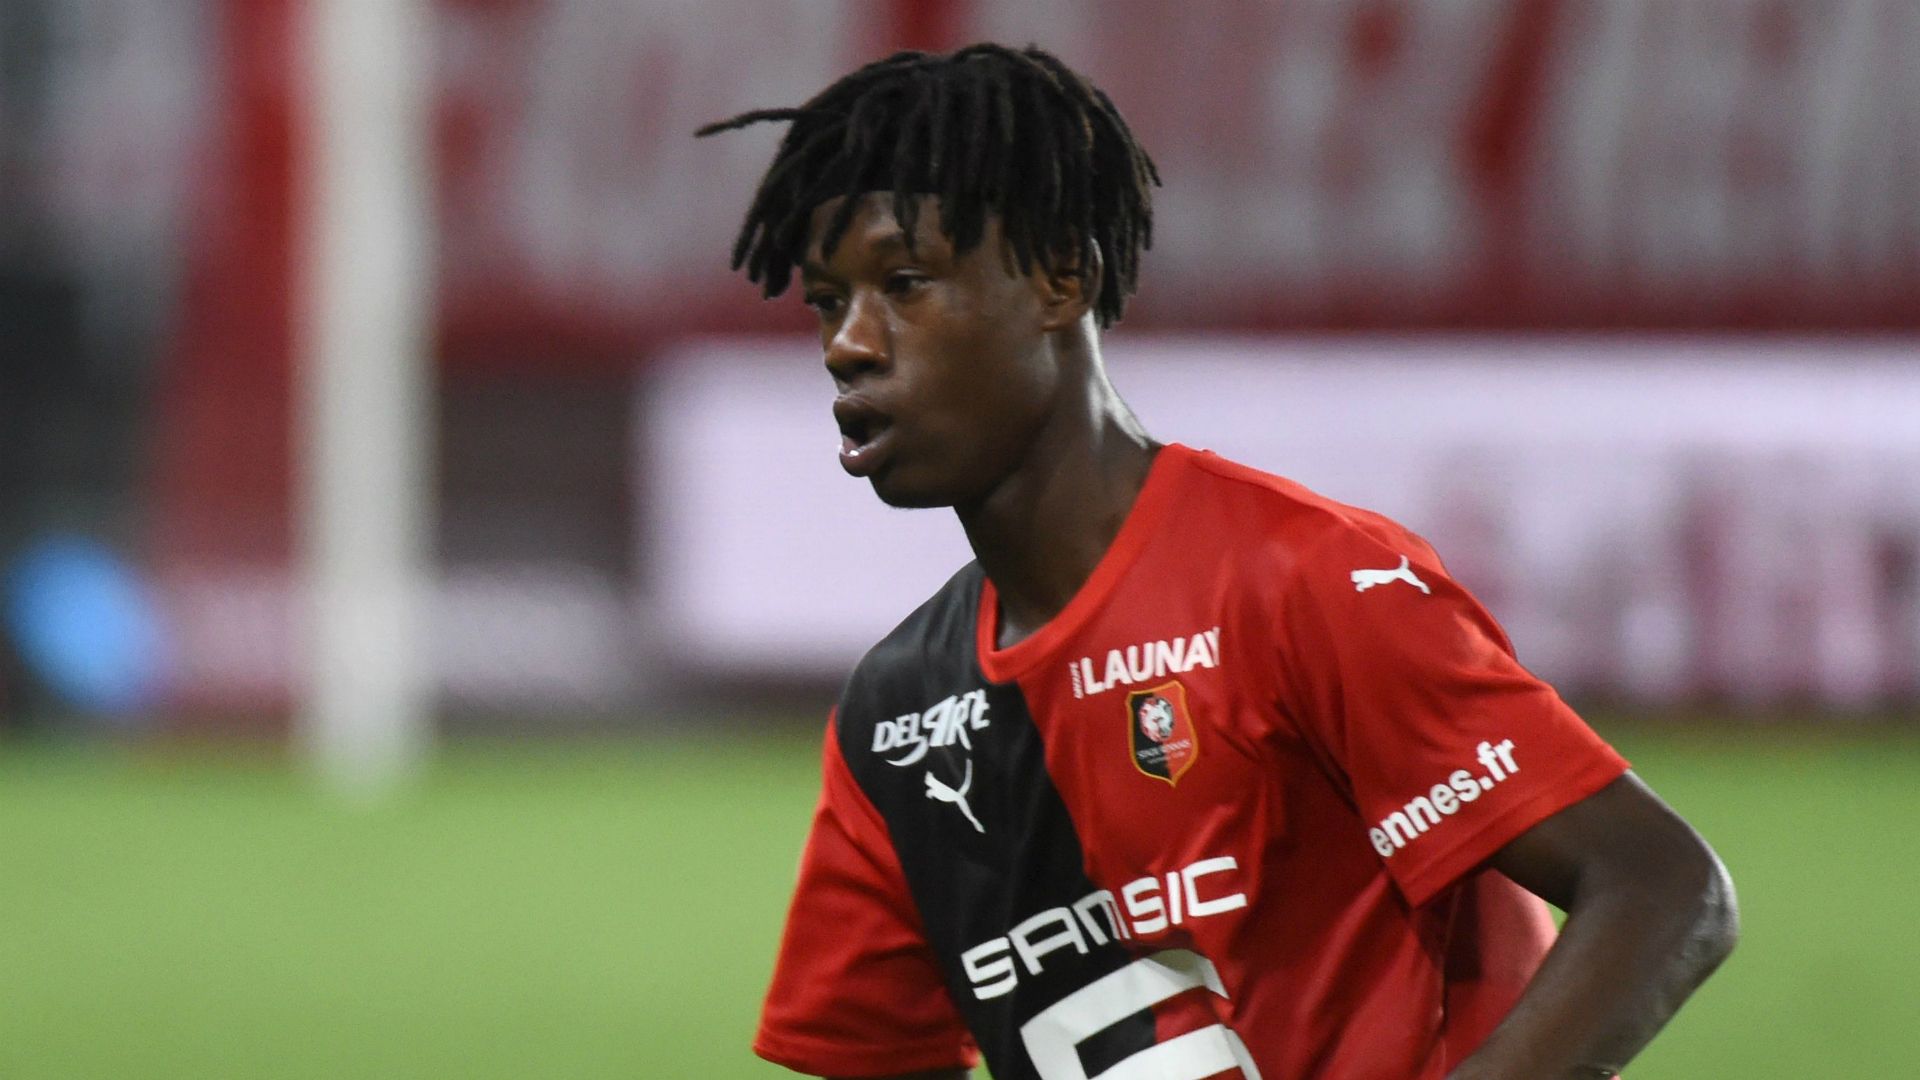 Eduardo Camavinga: Angola youngster reacts after helping Rennes stun PSG